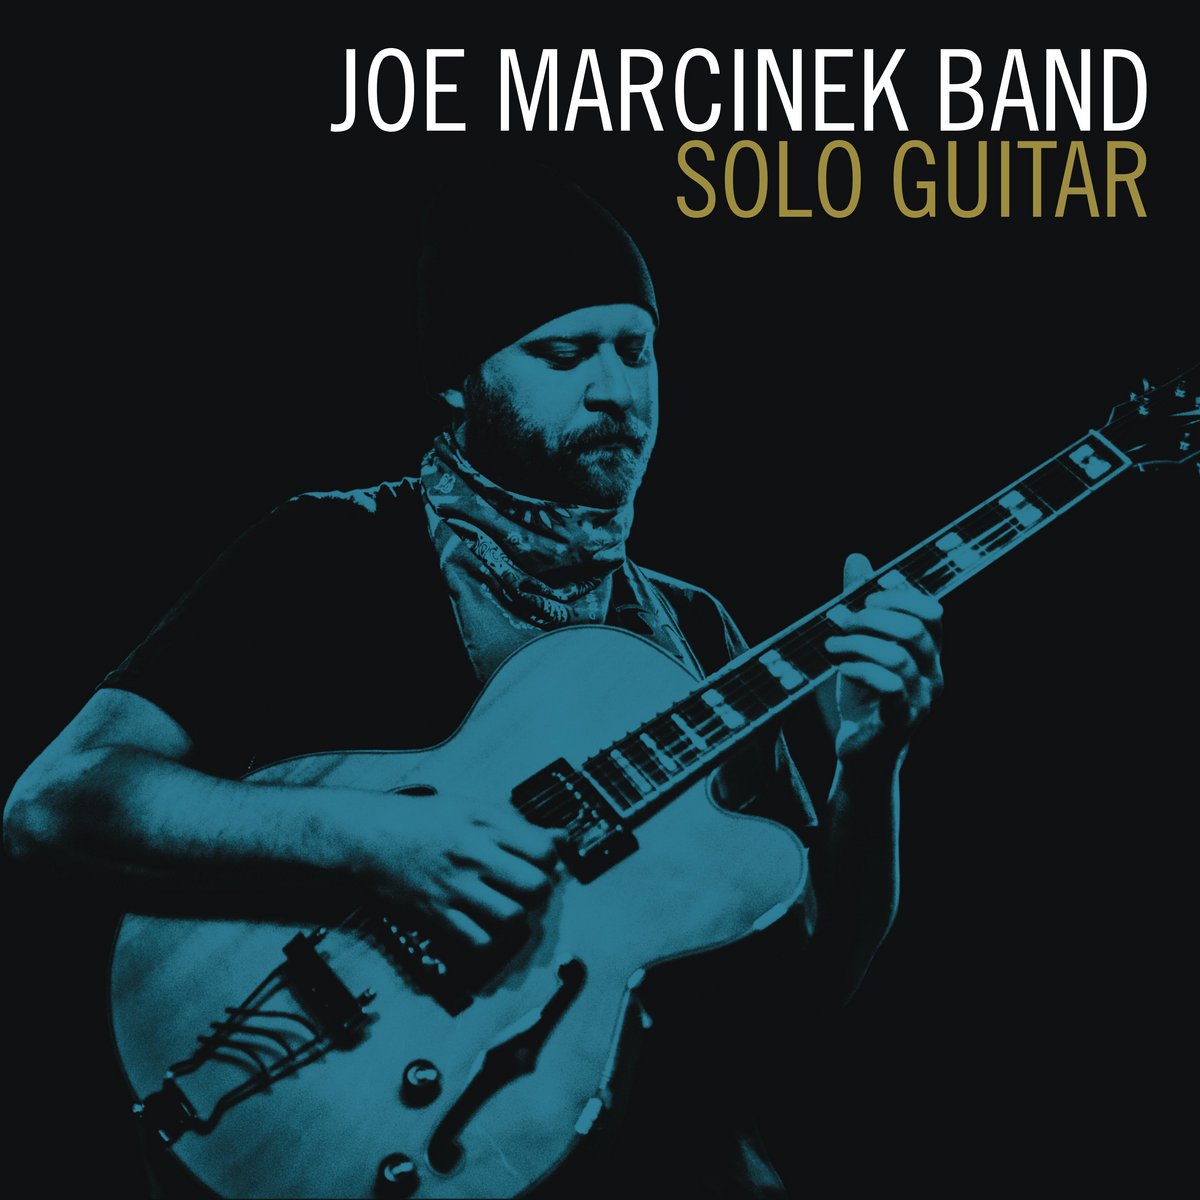 Joe Marcinek Band Solo Guitar.png